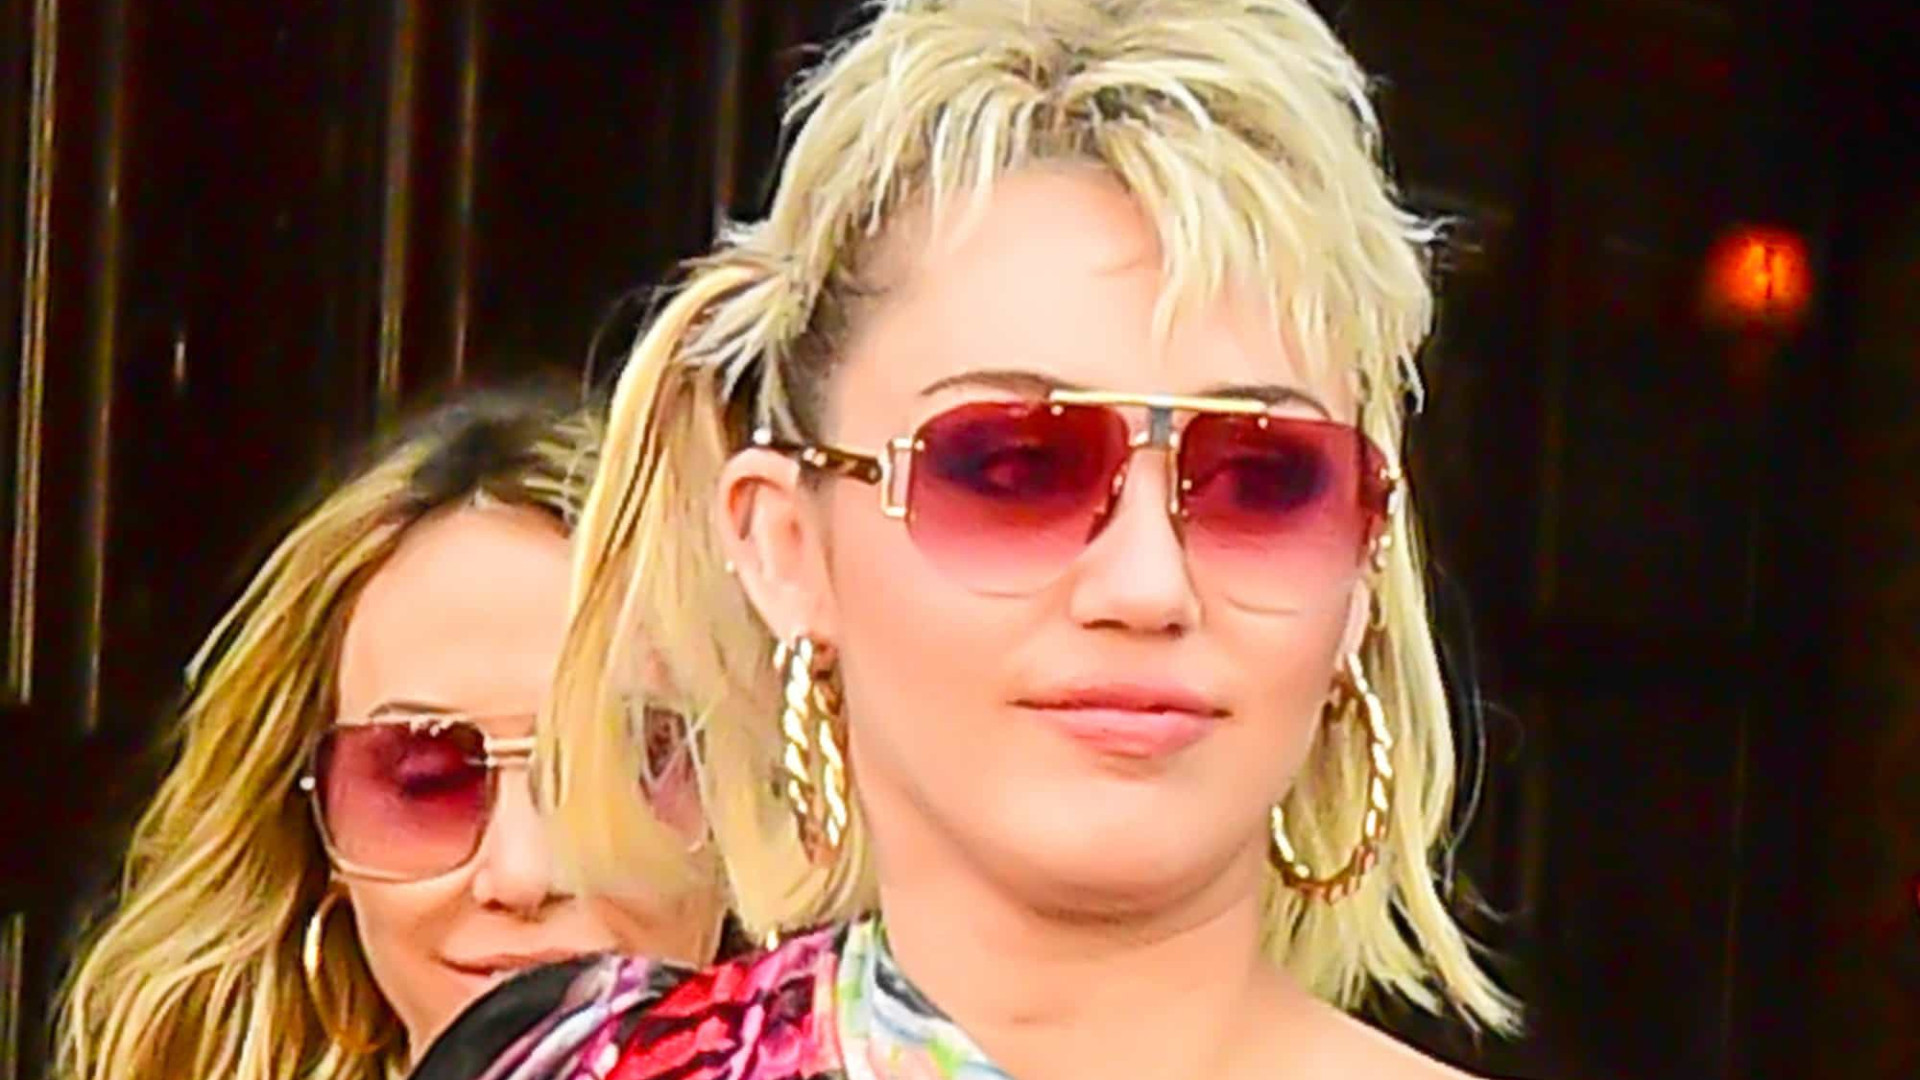 Miley Cyrus lamenta morte de fã brasileiro e fala sobre homofobia